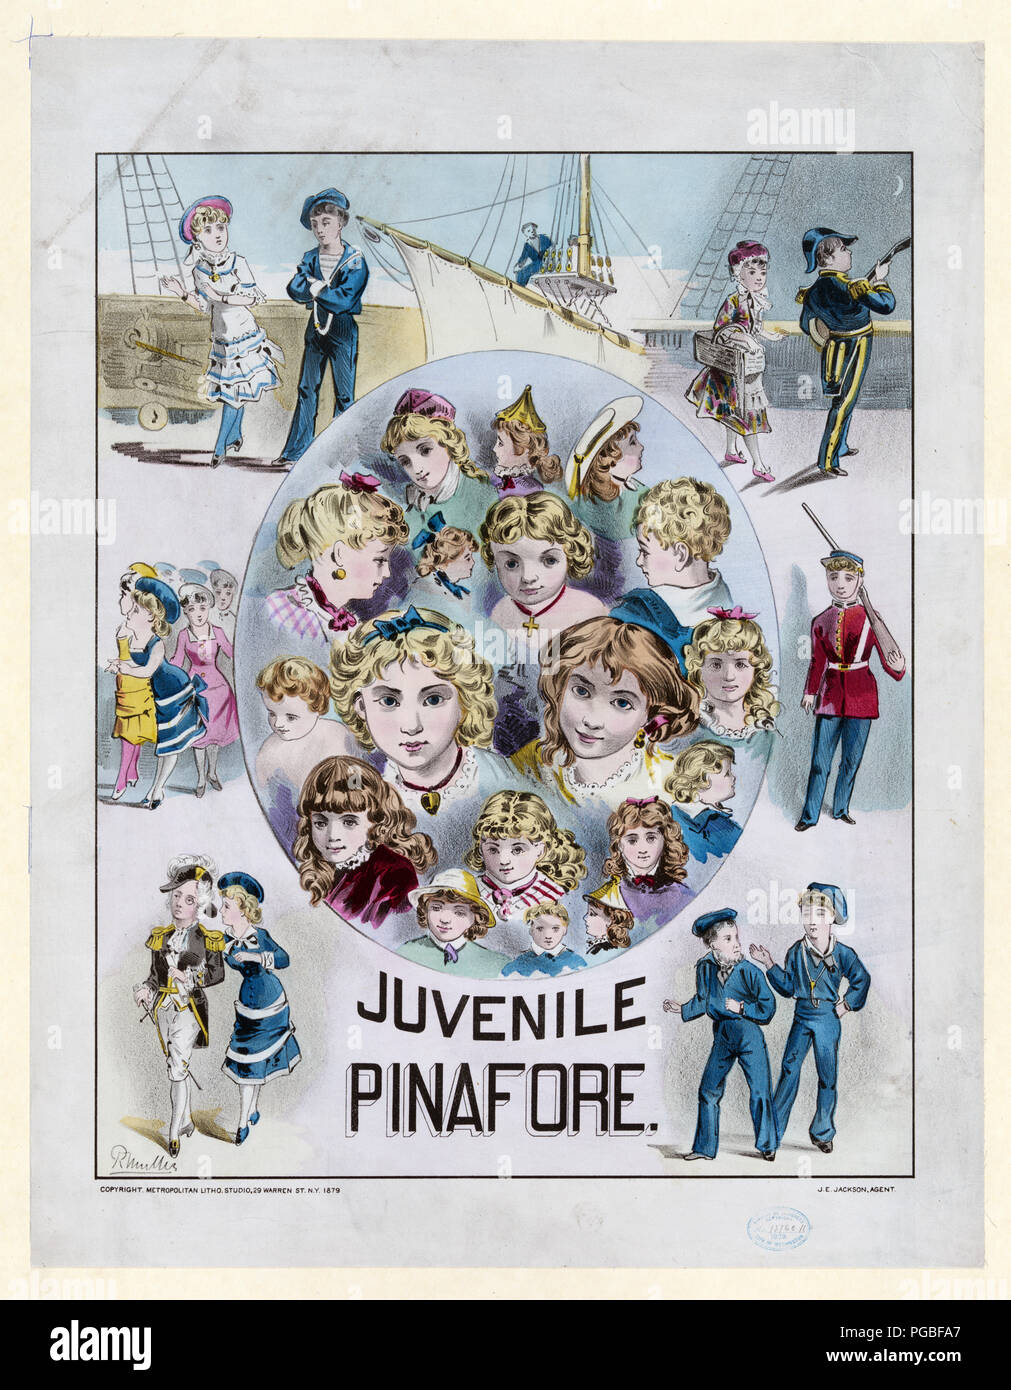 Juvenile pinafore ca 1879 Stock Photo